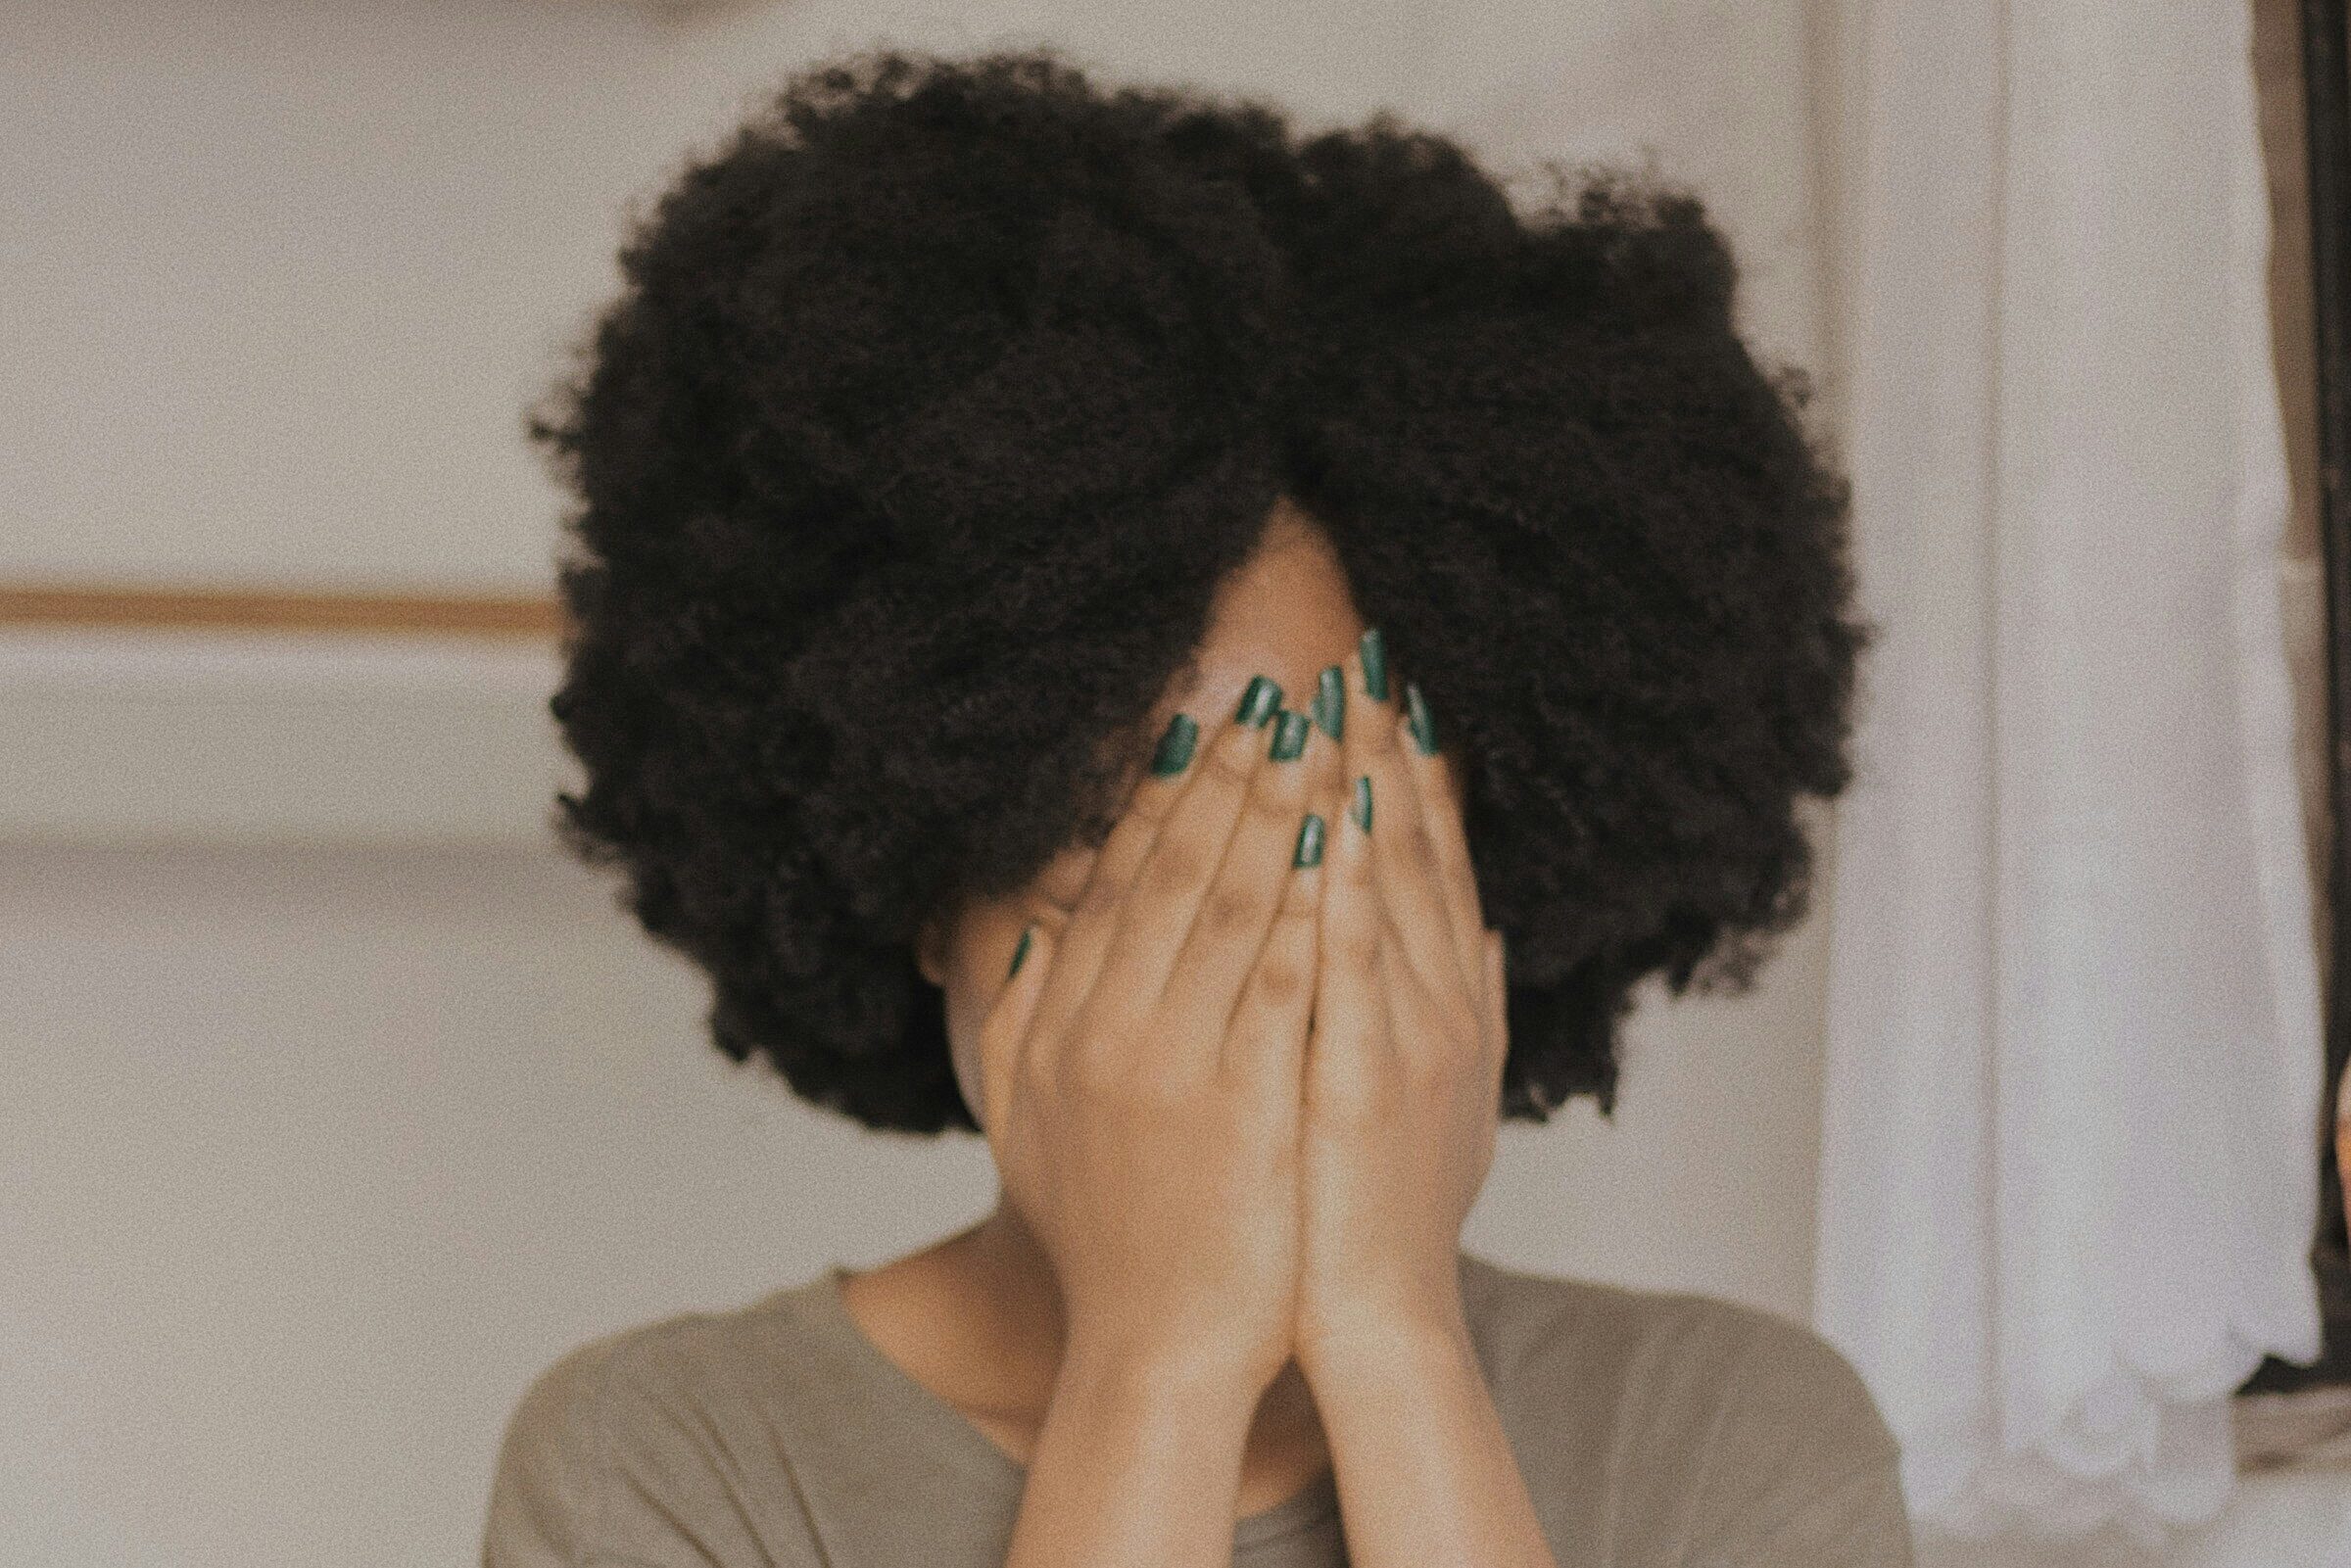 Black woman with afro. 4c hair. 4b hair. DIY hair mask for curly hair